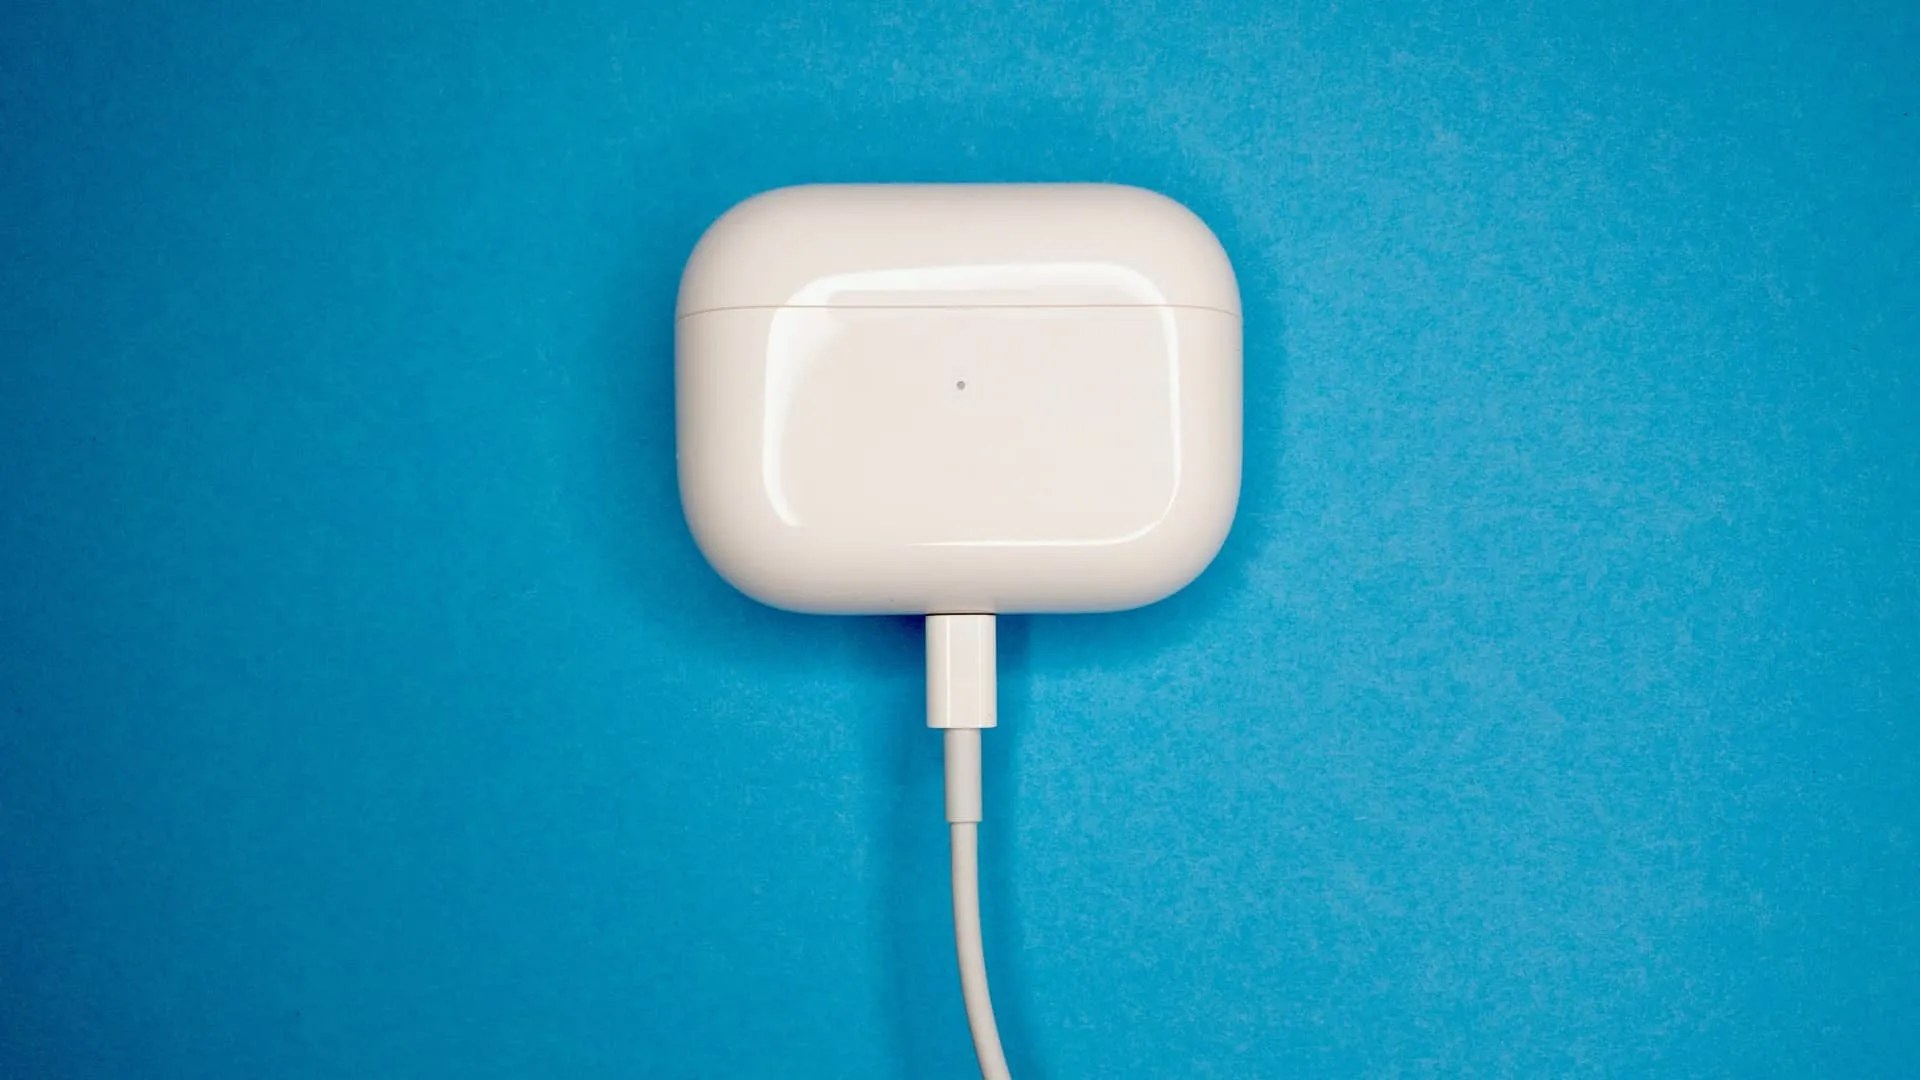 AirPods Pro 放在充電盒中，使用 Lightning 轉 USB 數據線充電，背景為藍色紋理